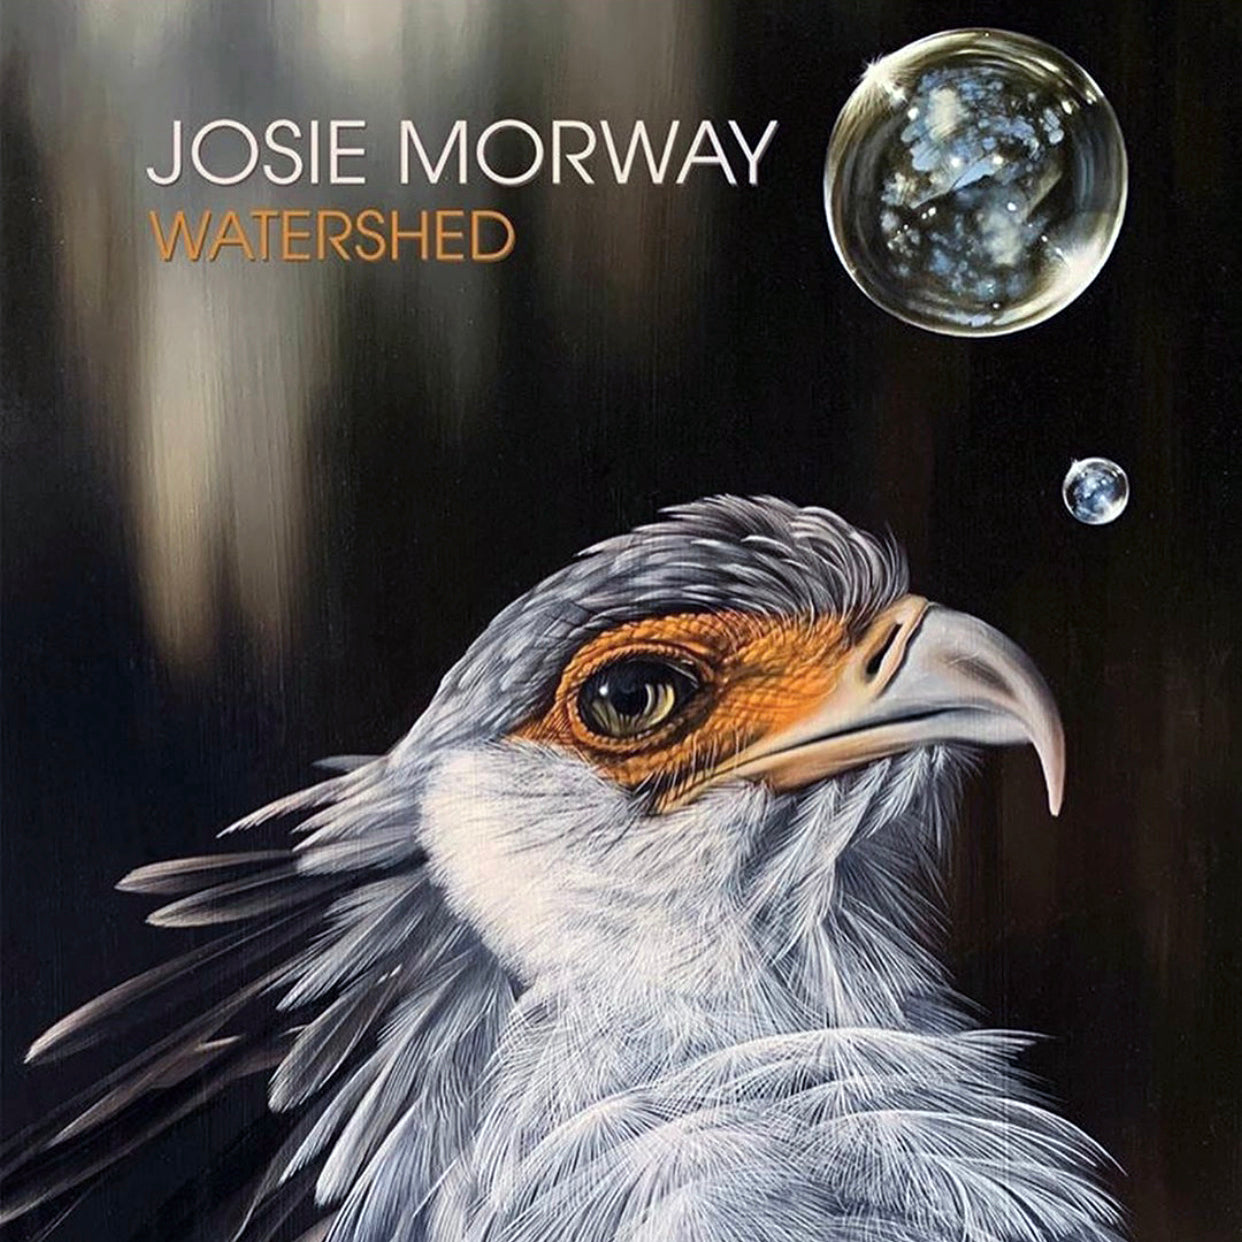 Josie Morway's "Watershed" Solo Exhibit